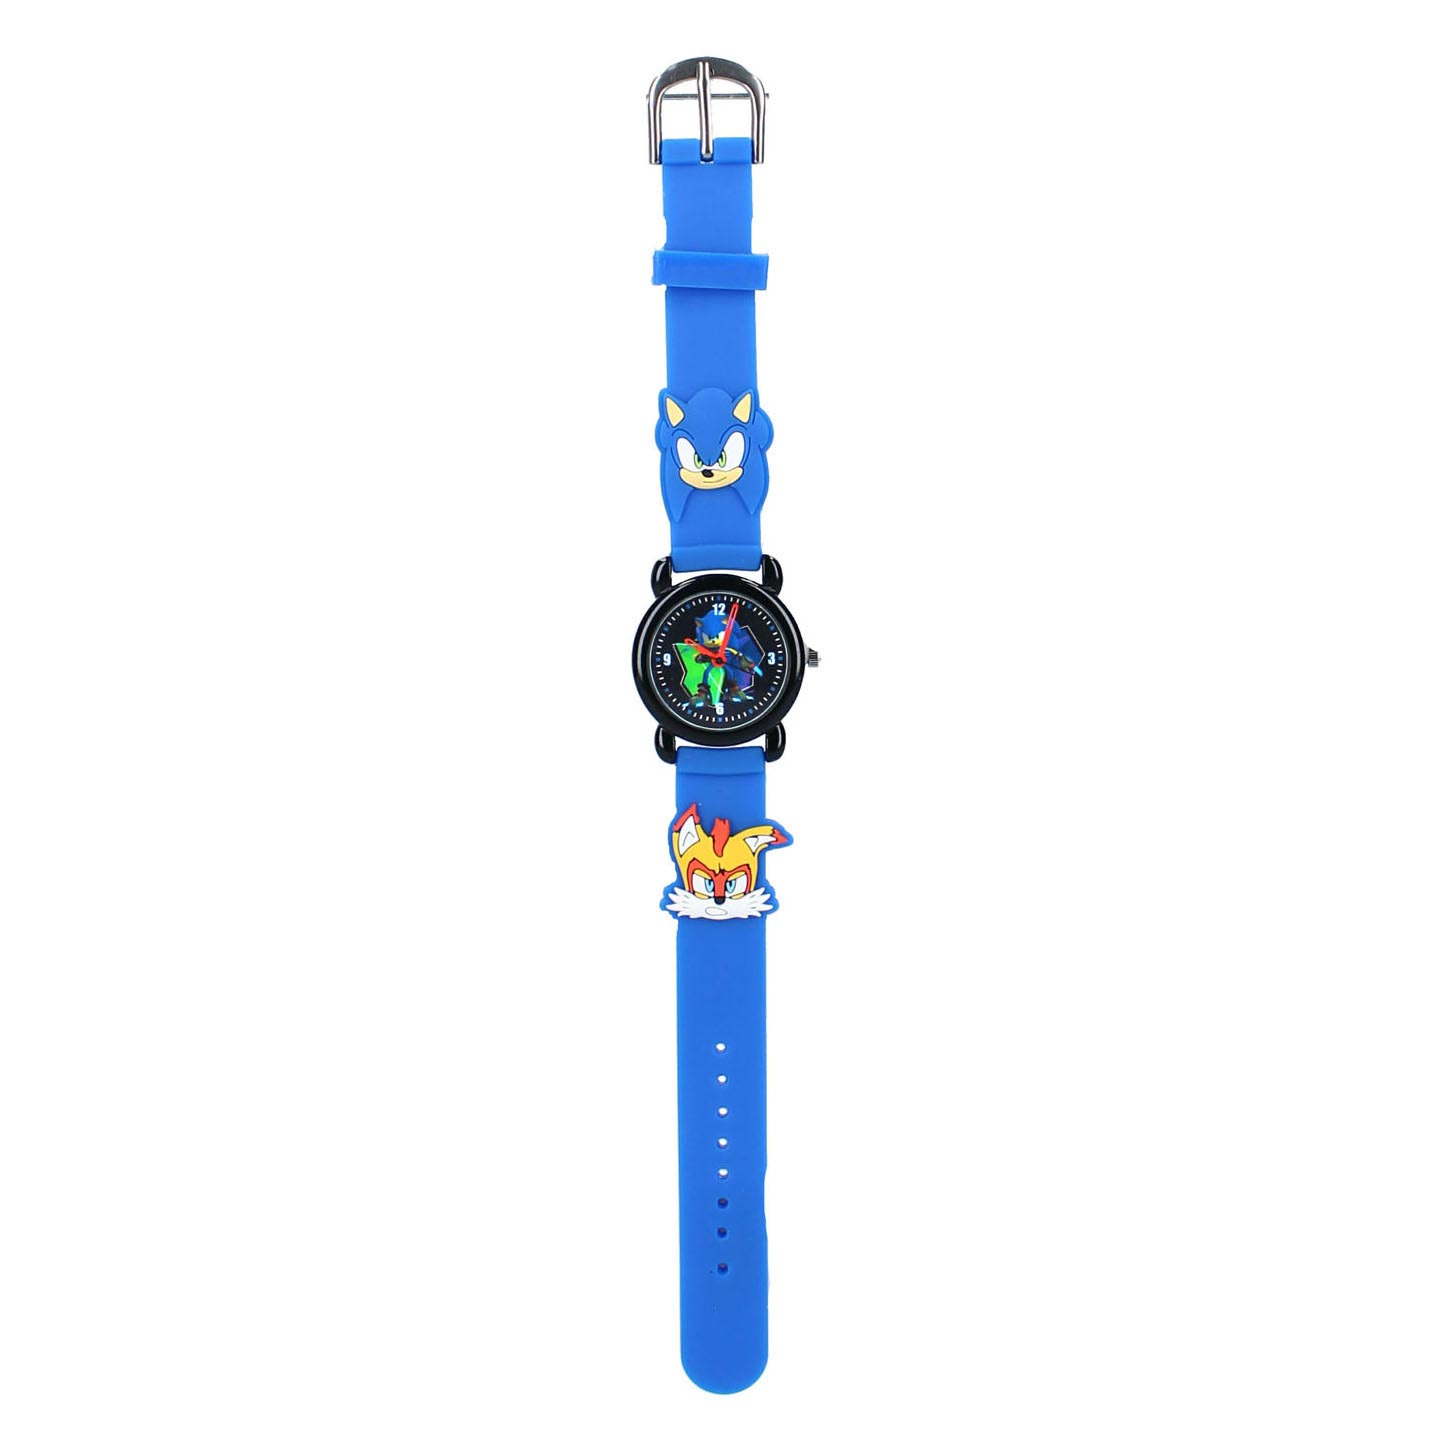 Horloge Sonic Kids Time Blauw